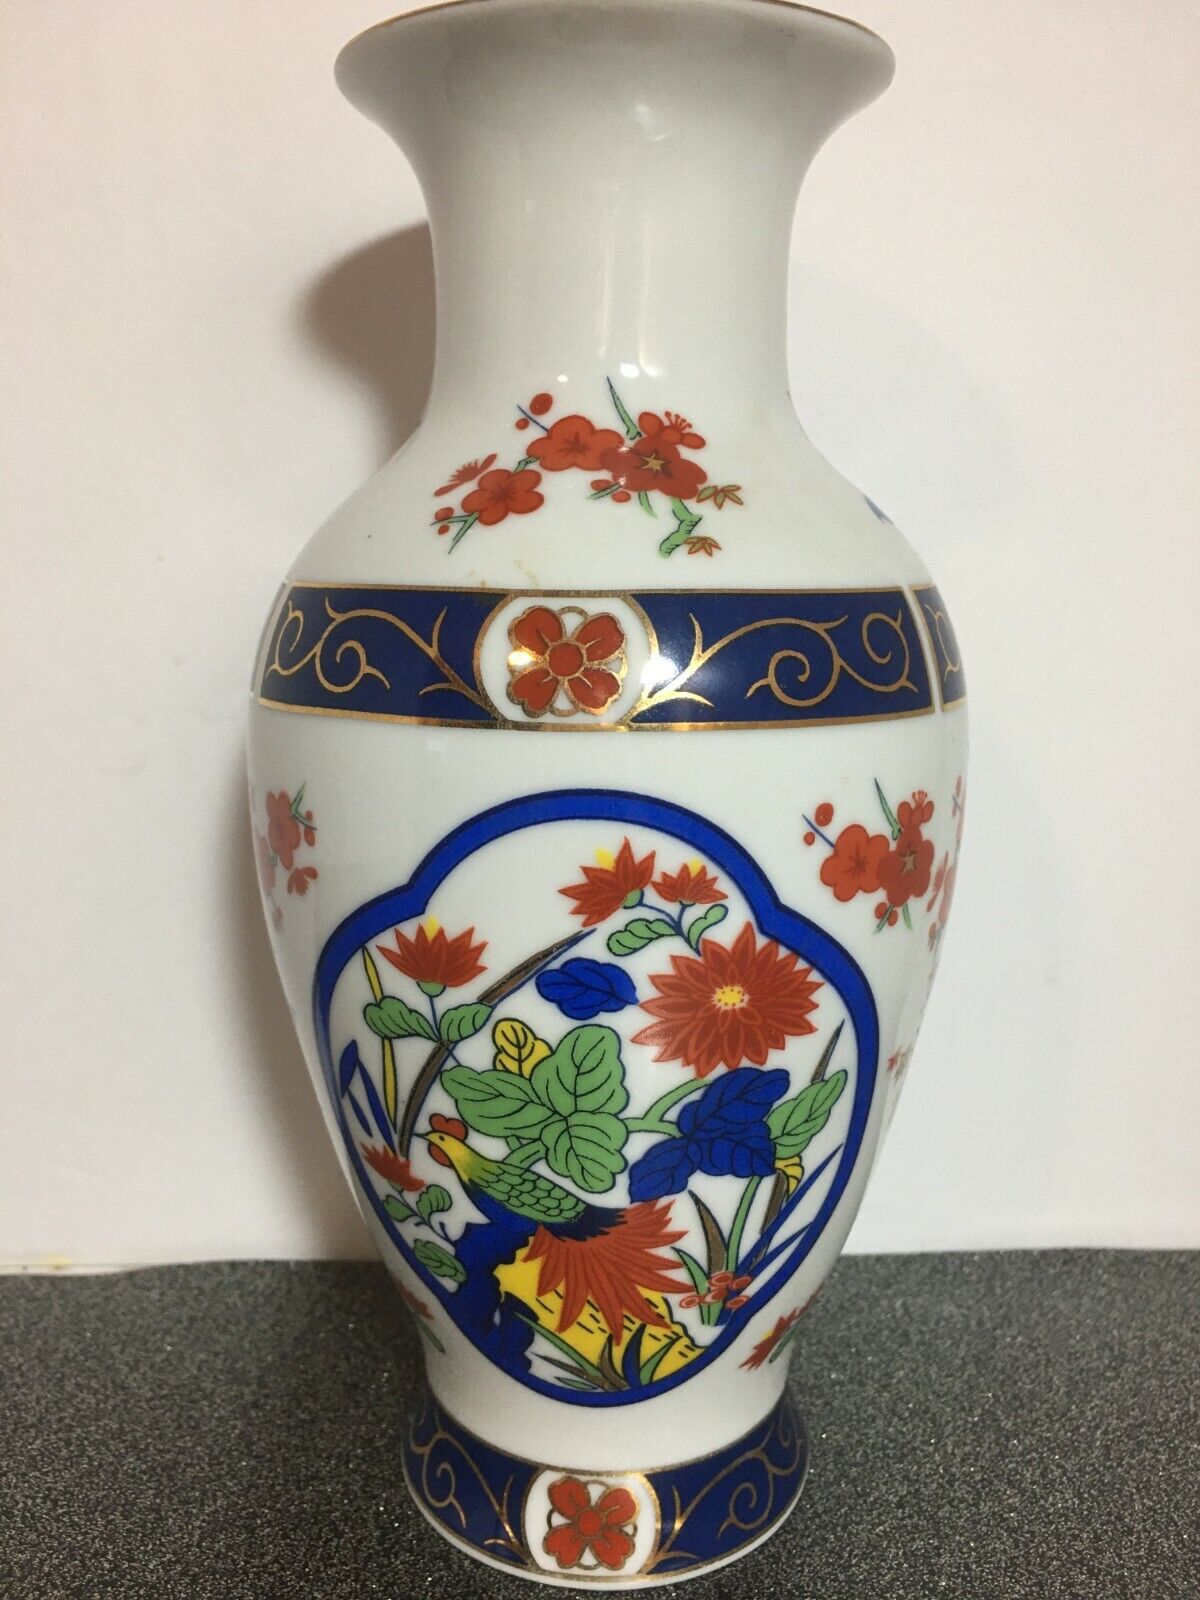 Lovely Vintage Japanese Colorful Vase With Flowers & Birds Gold Design 8.5